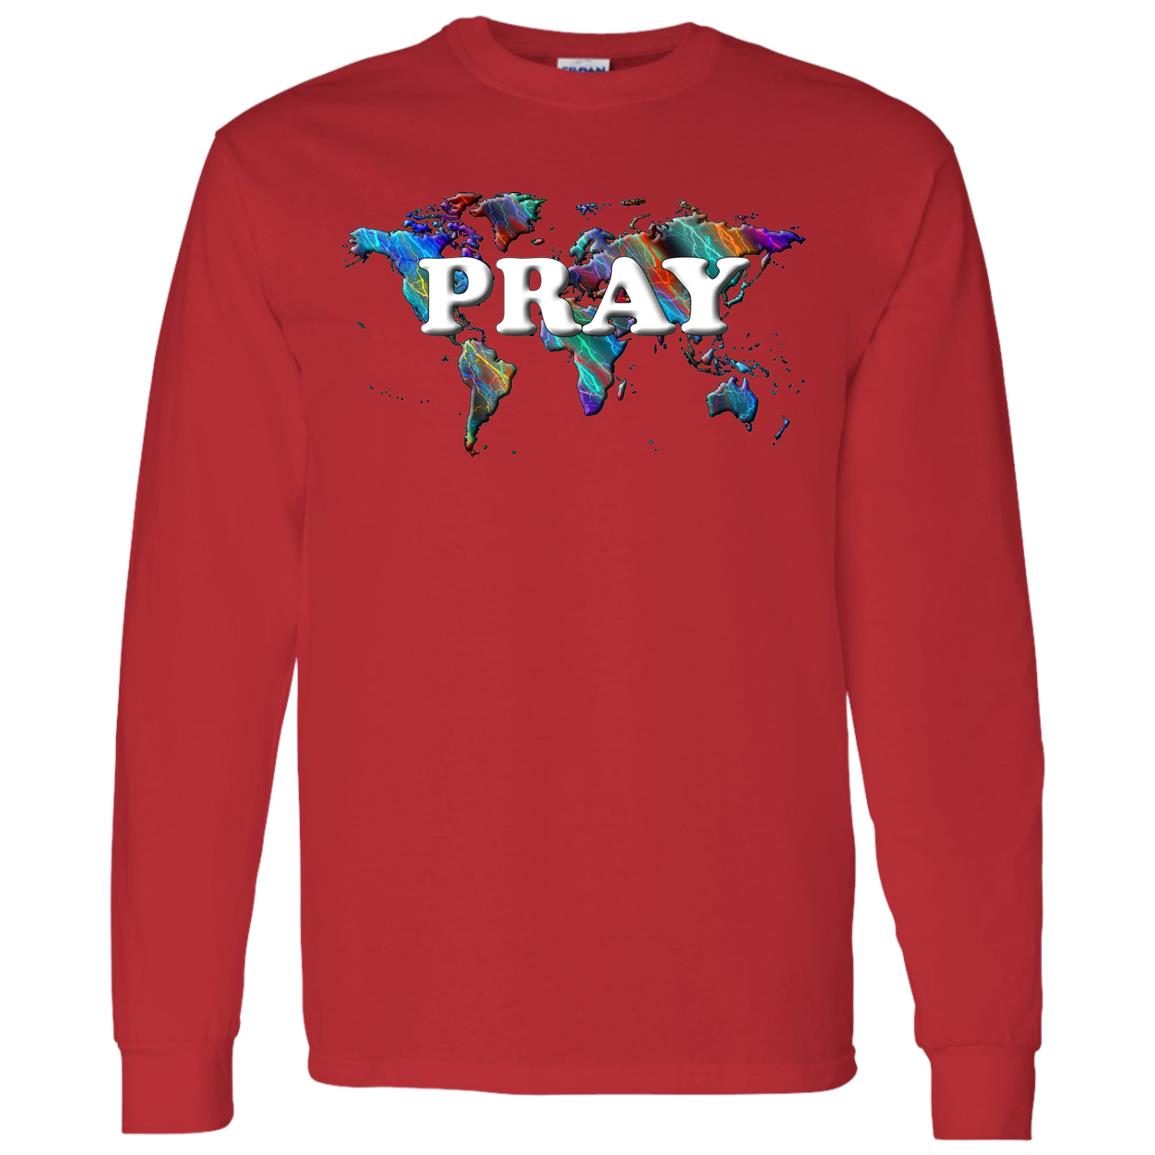 Pray LS T-Shirt